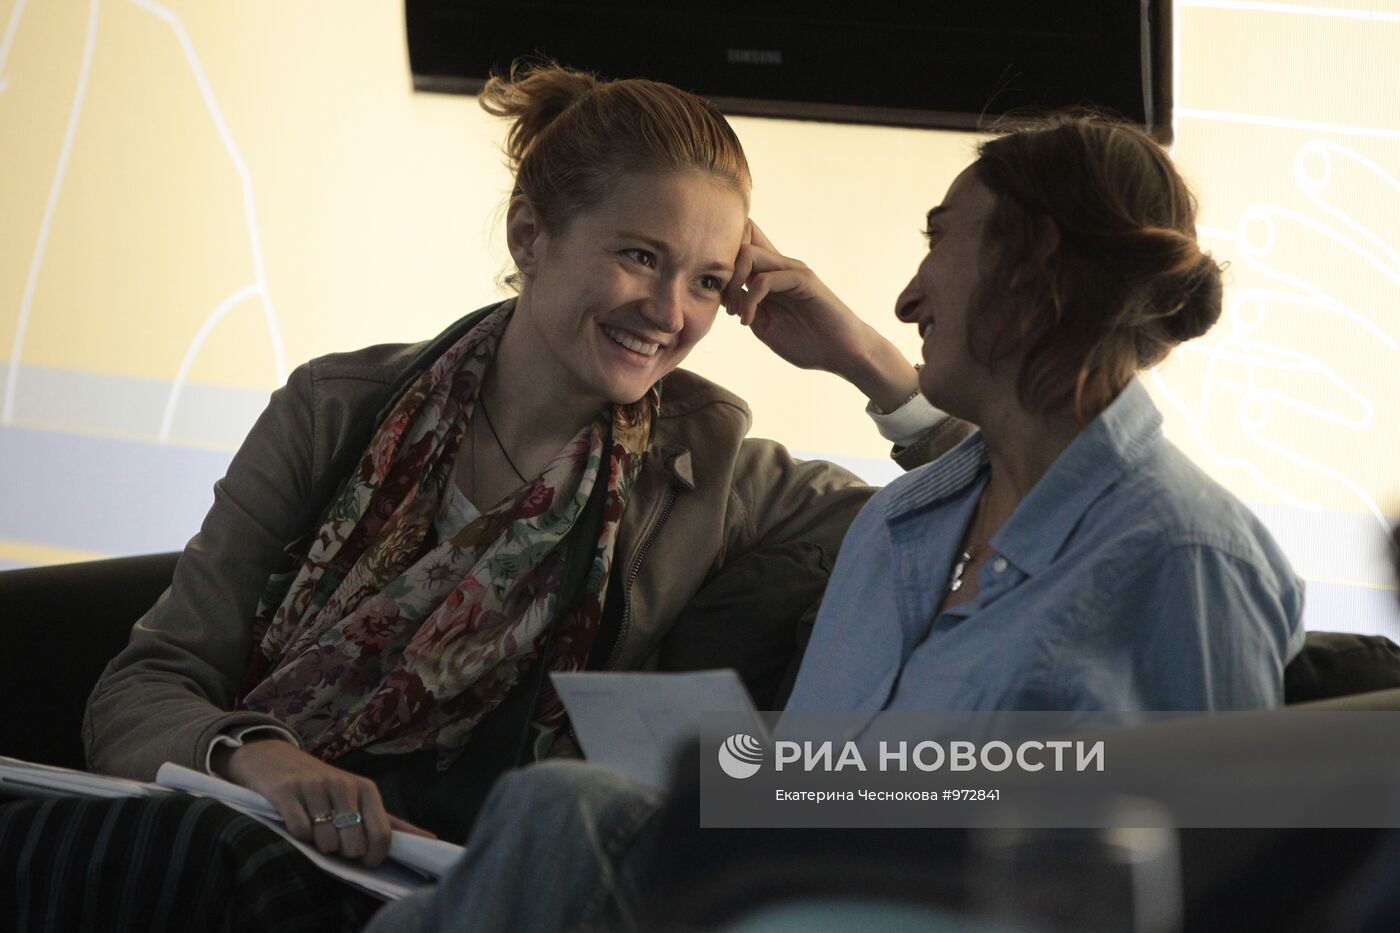 Съемки фильма "Любовь с акцентом" проходят в Тбилиси